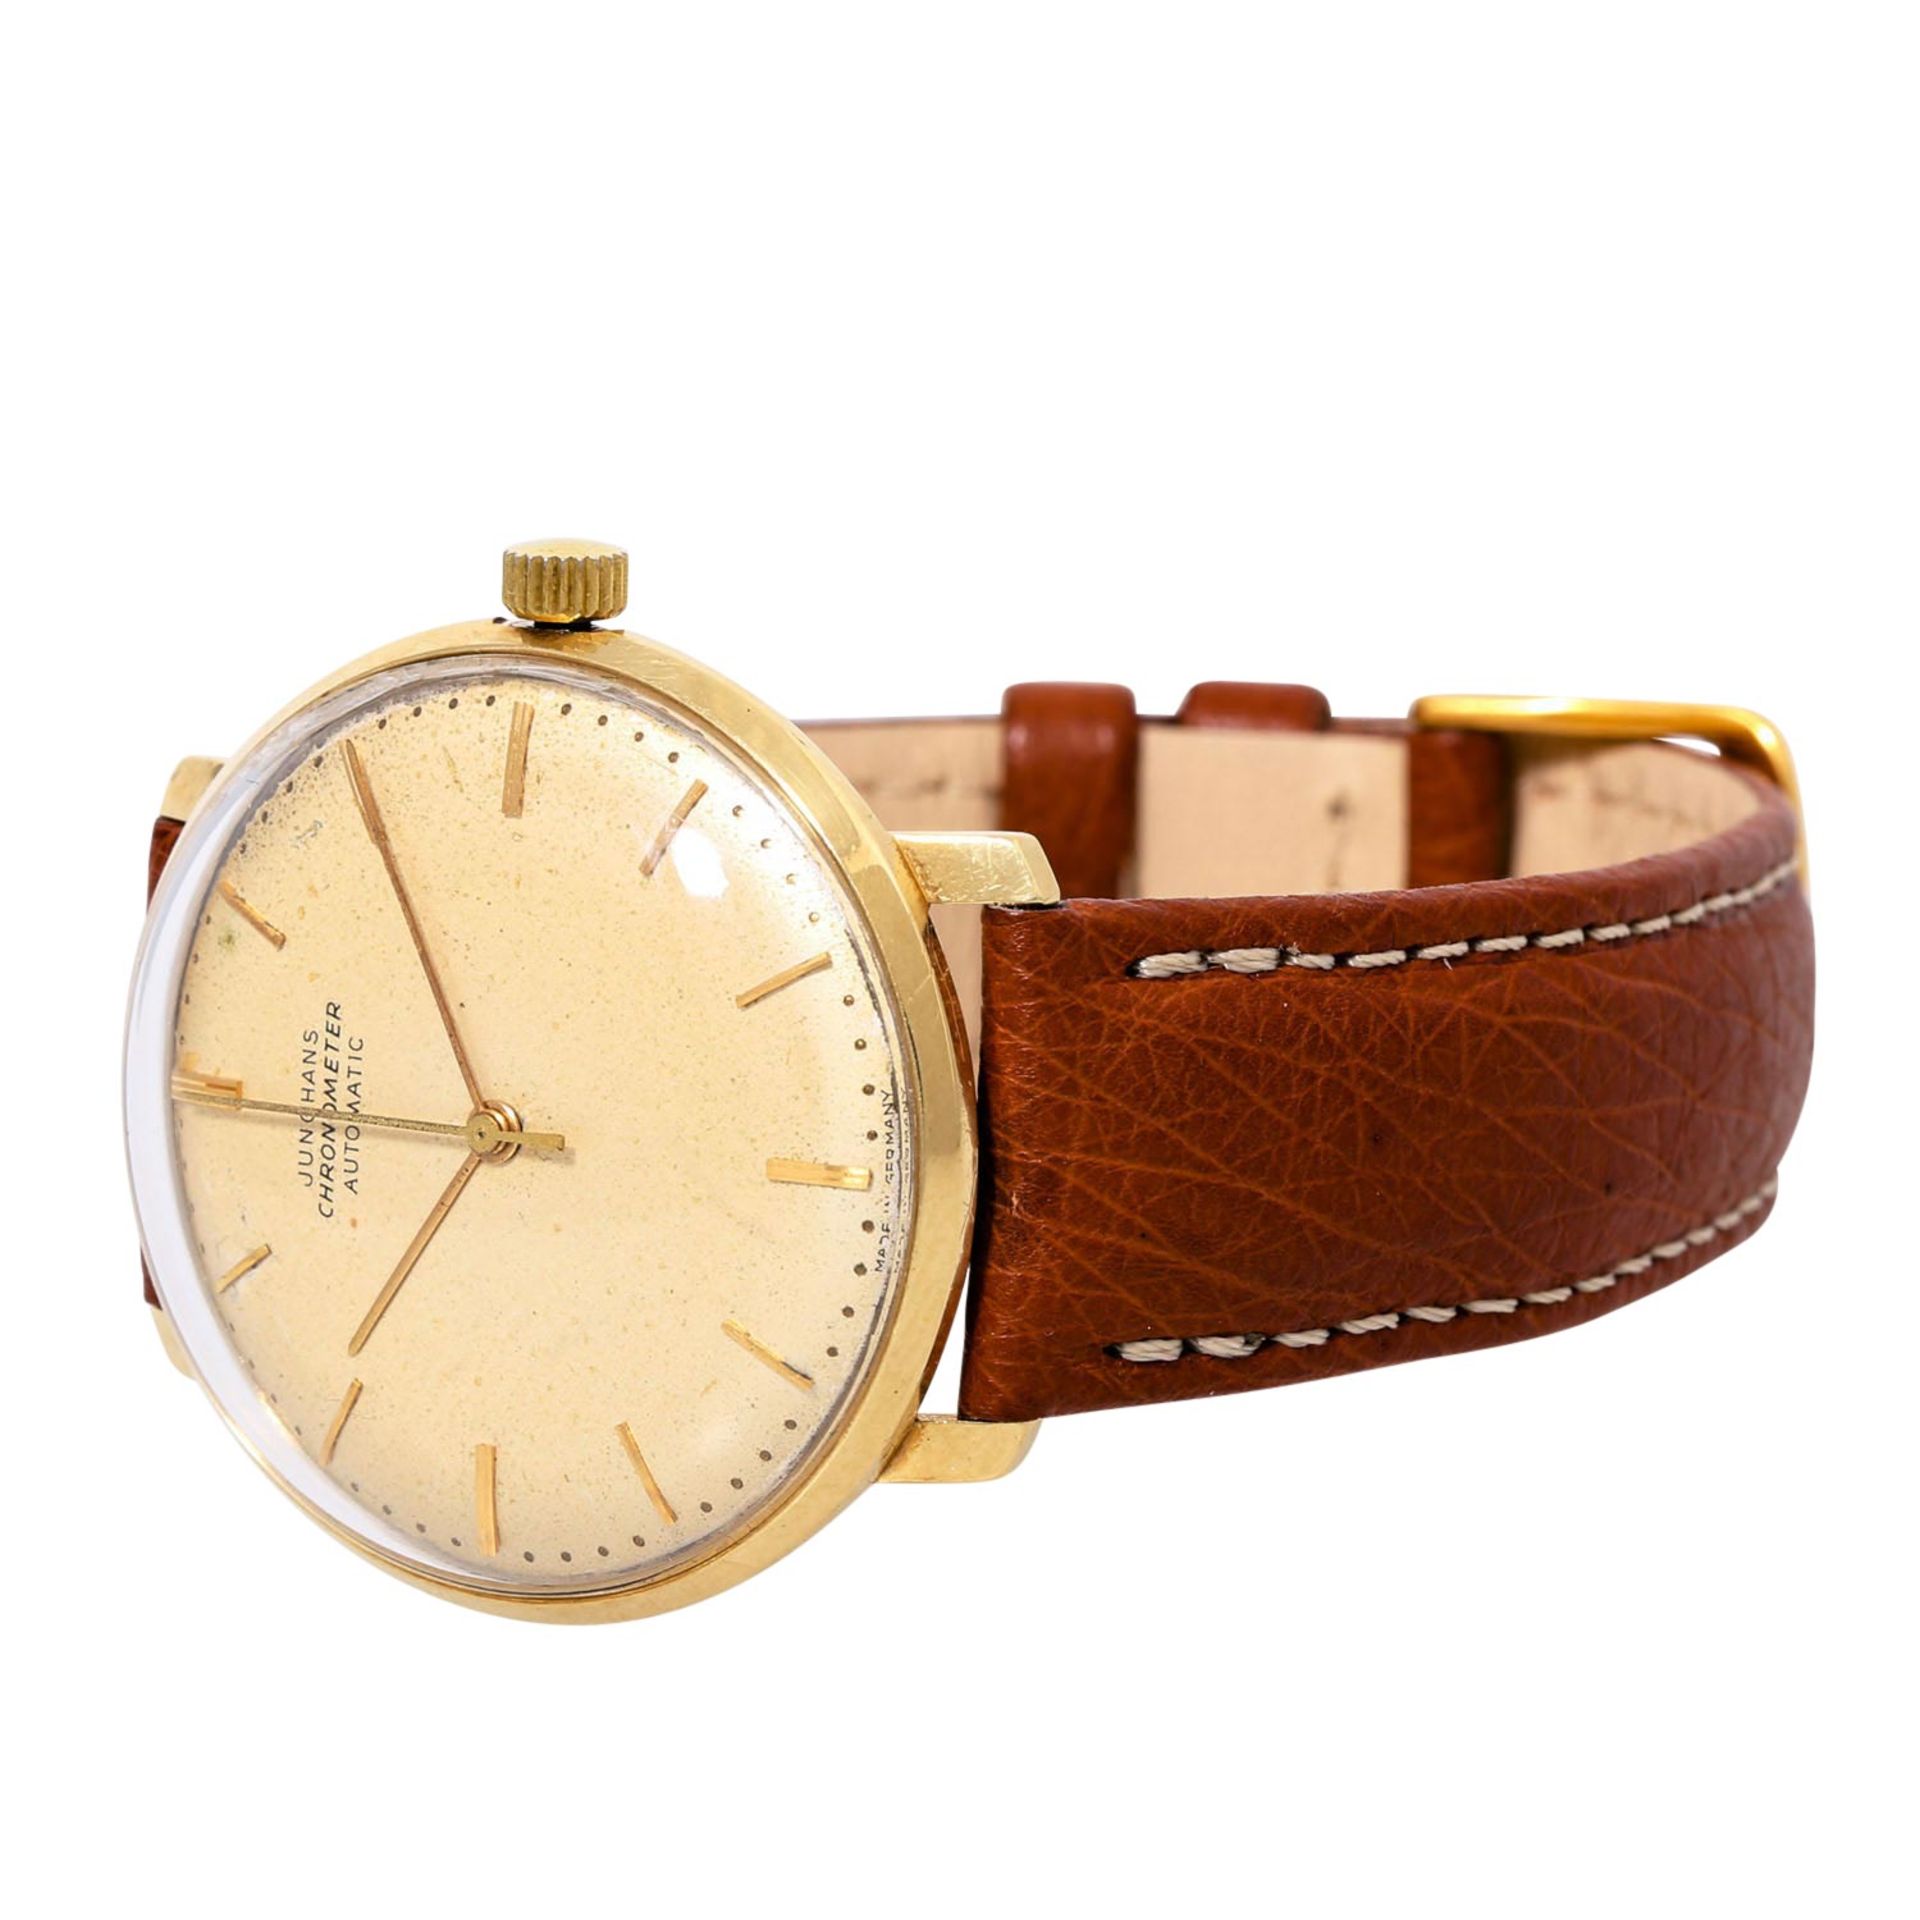 JUNGHANS Vintage Automatic Chronometer Herren Armbanduhr. Ca. 1960er Jahre. - Bild 6 aus 7